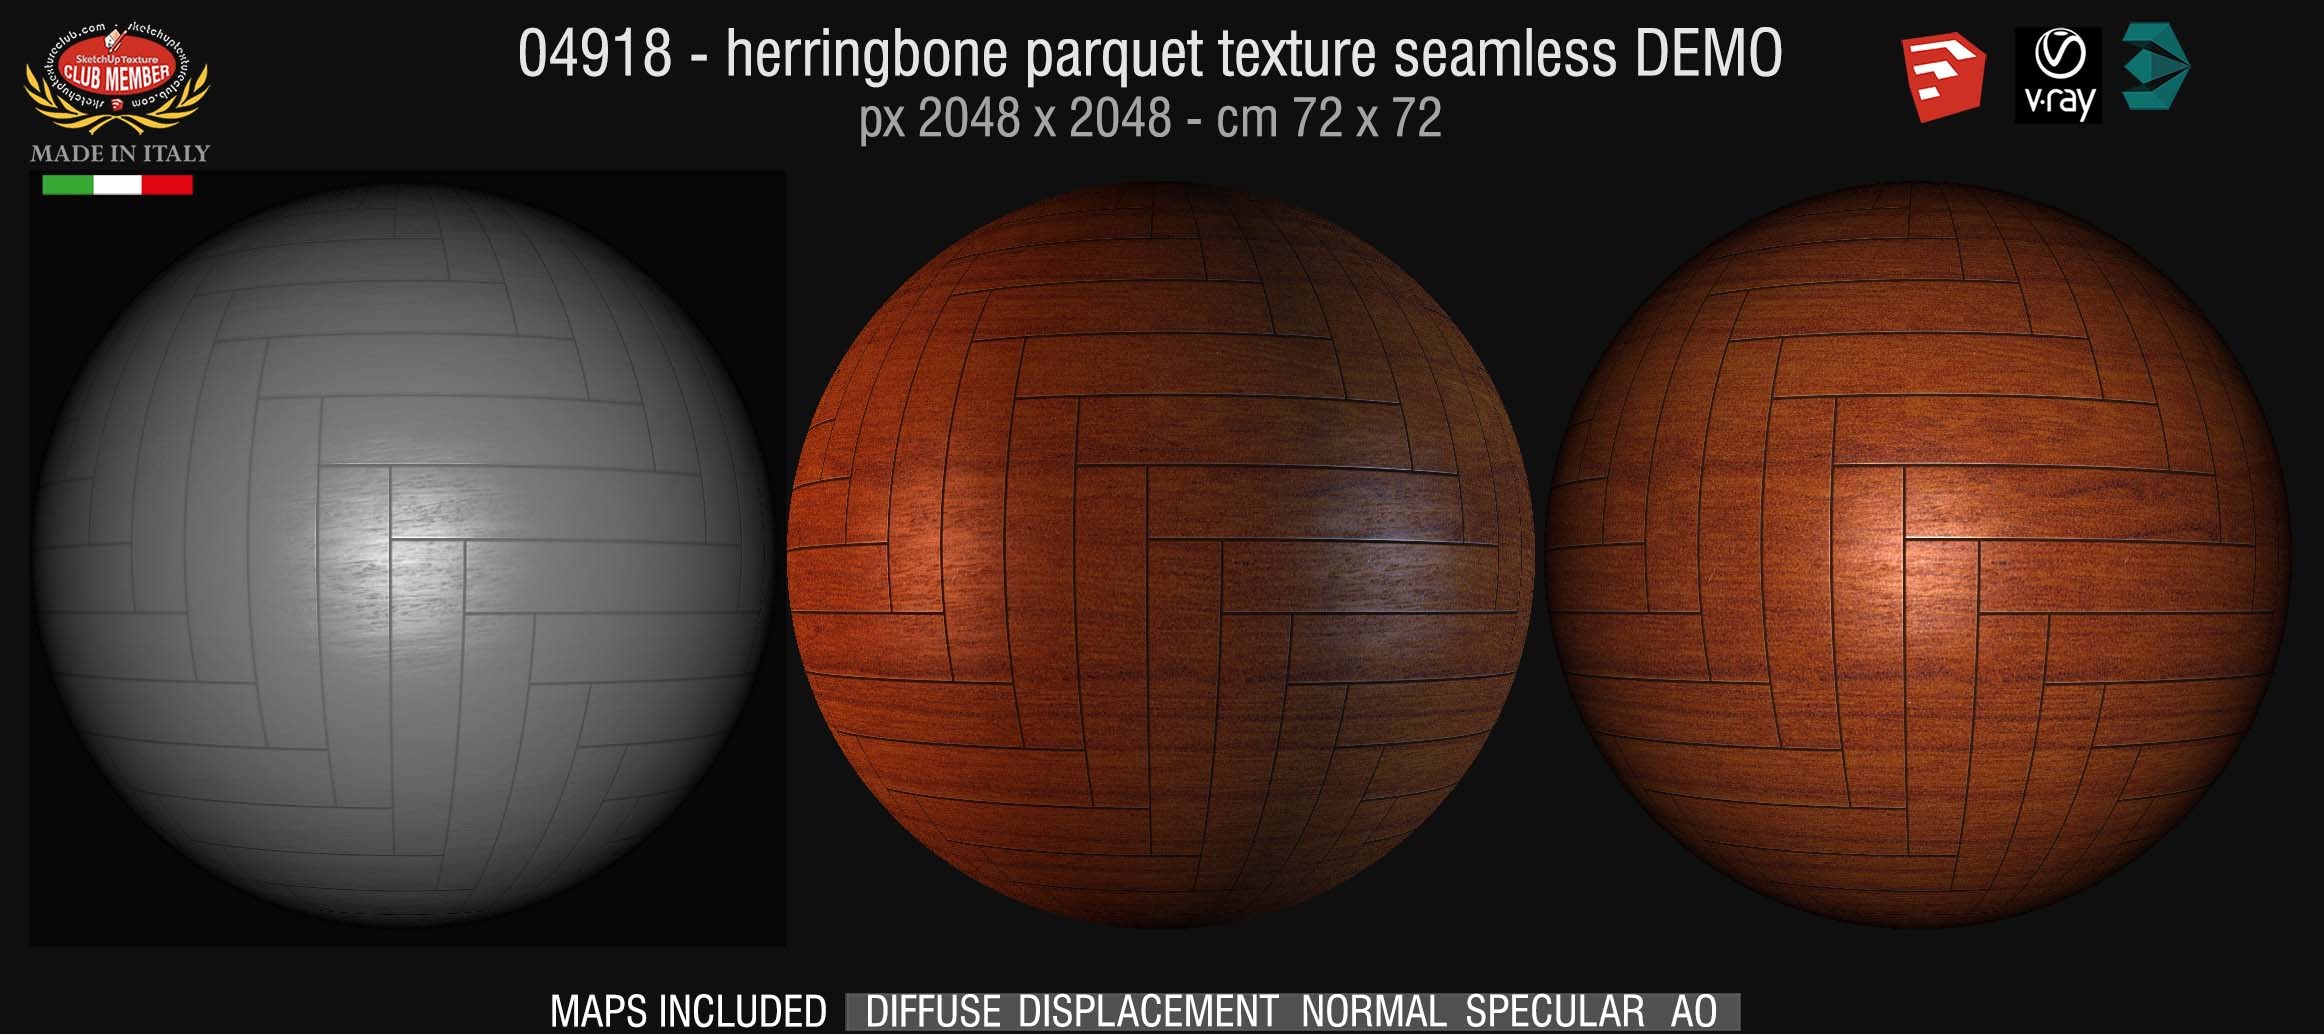 04918 HR Herringbone parquet texture seamless + maps DEMO